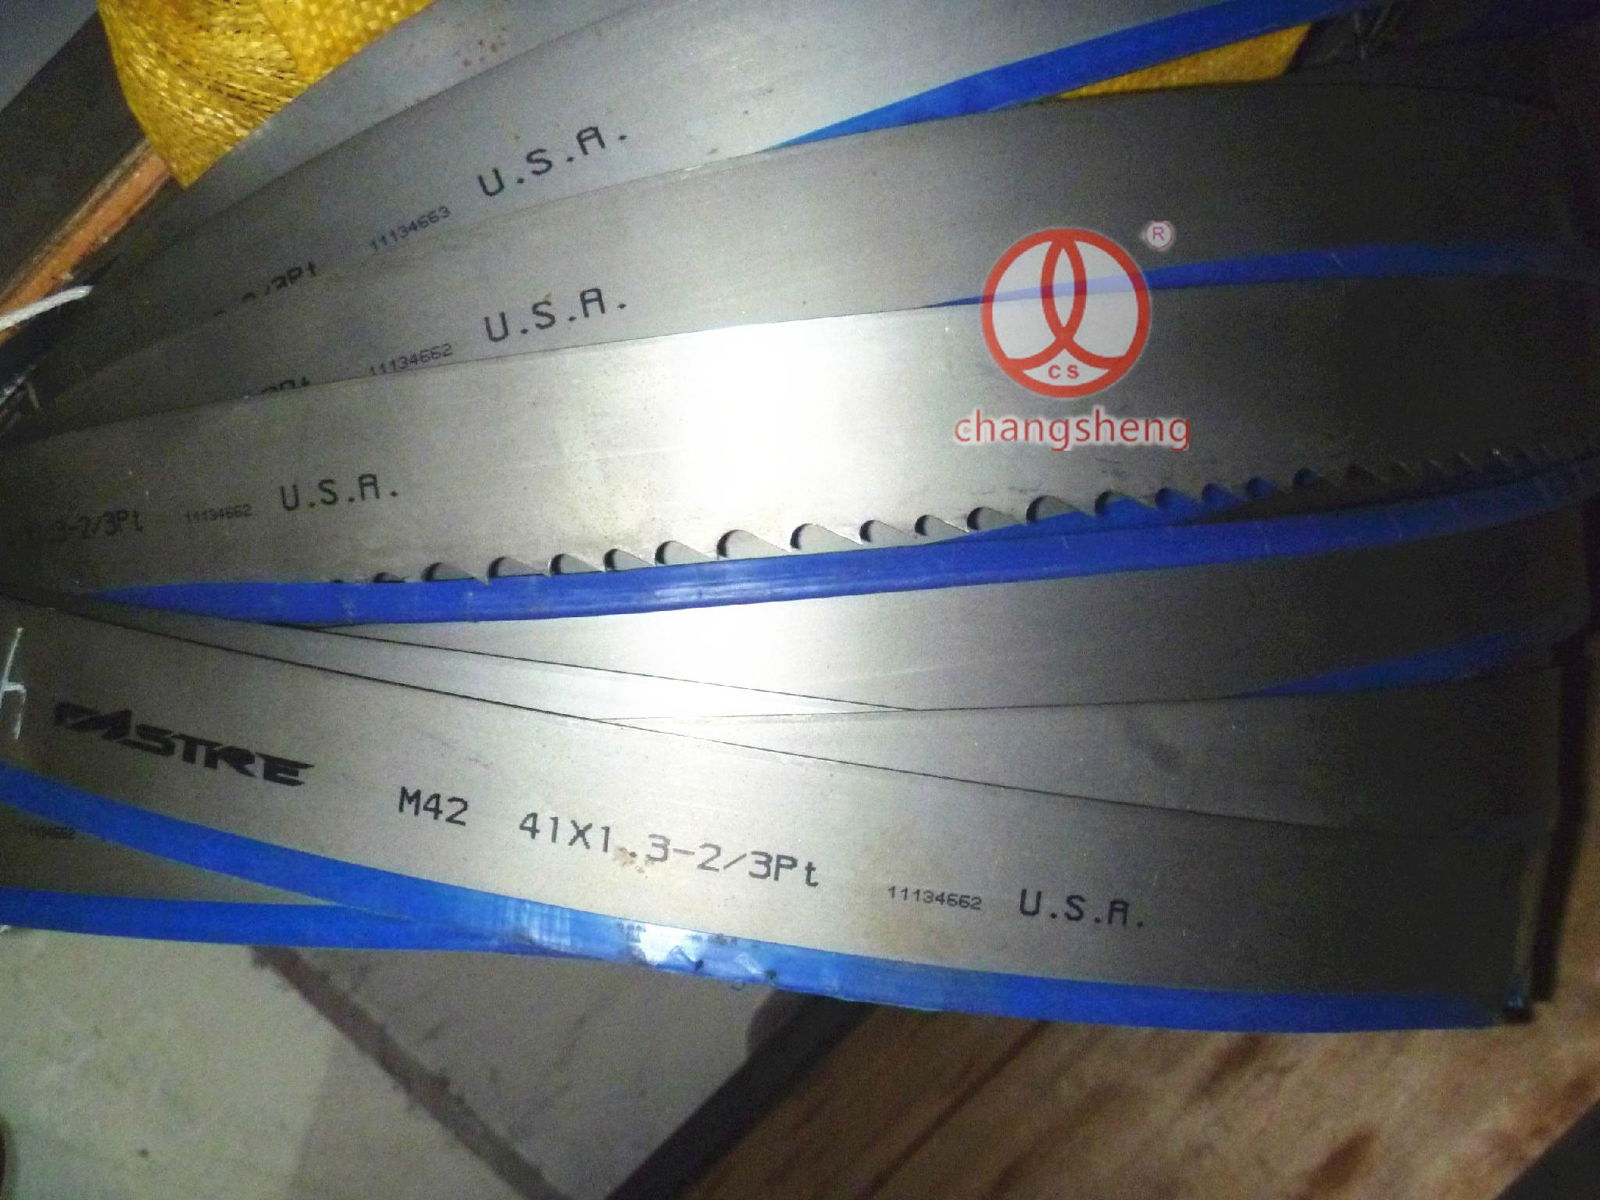 27*0.9/34*1.1/41*1.3 bimetal Band Saw Blade for cutting wood and metal 2